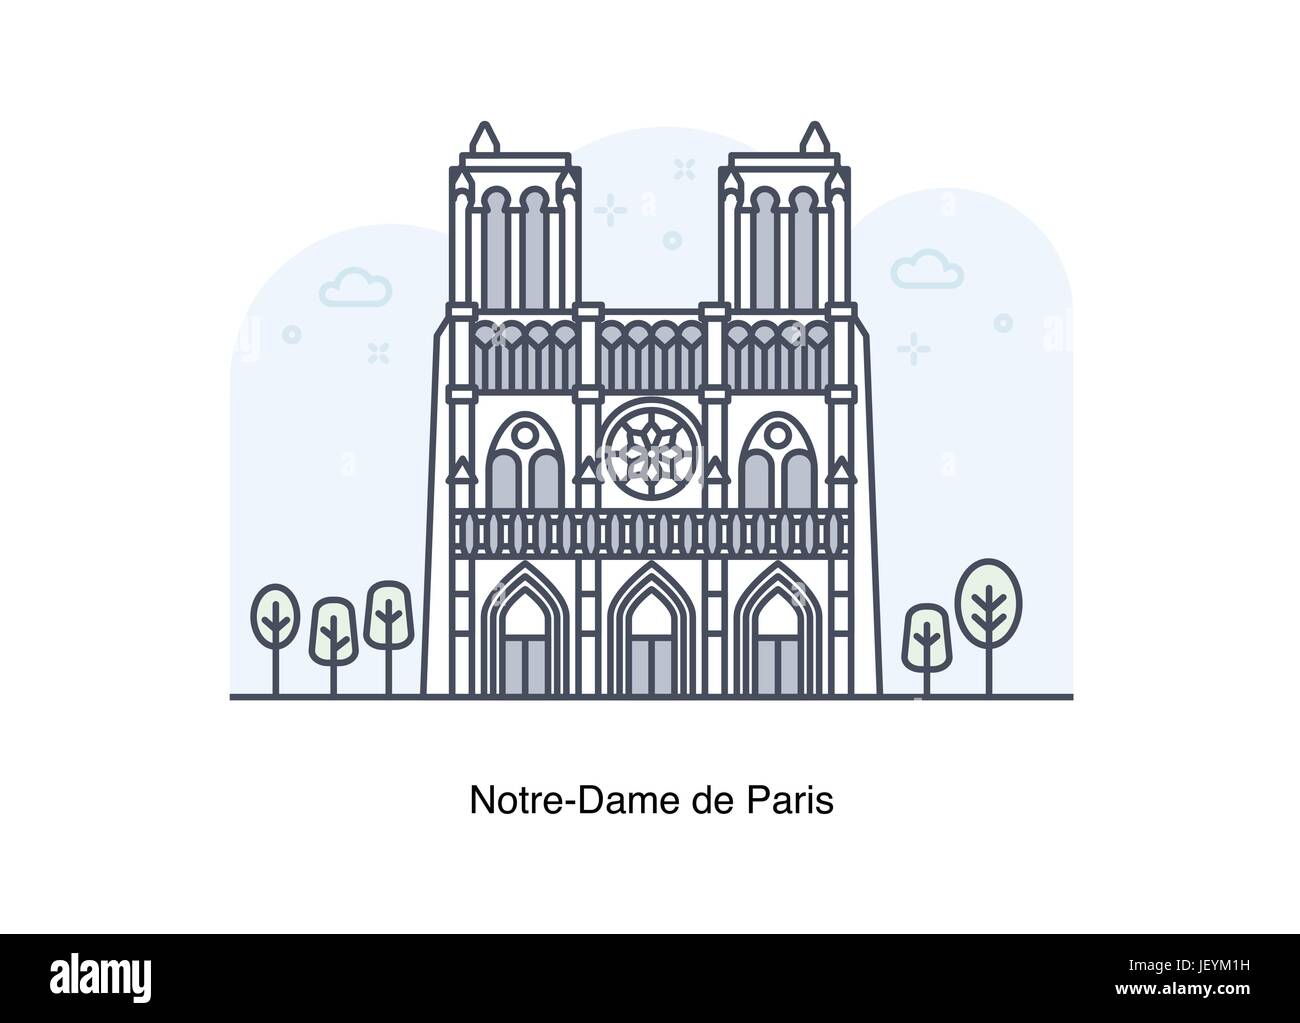 Vektorgrafik-Linie von Notre-Dame de Paris, Frankreich. Stock Vektor